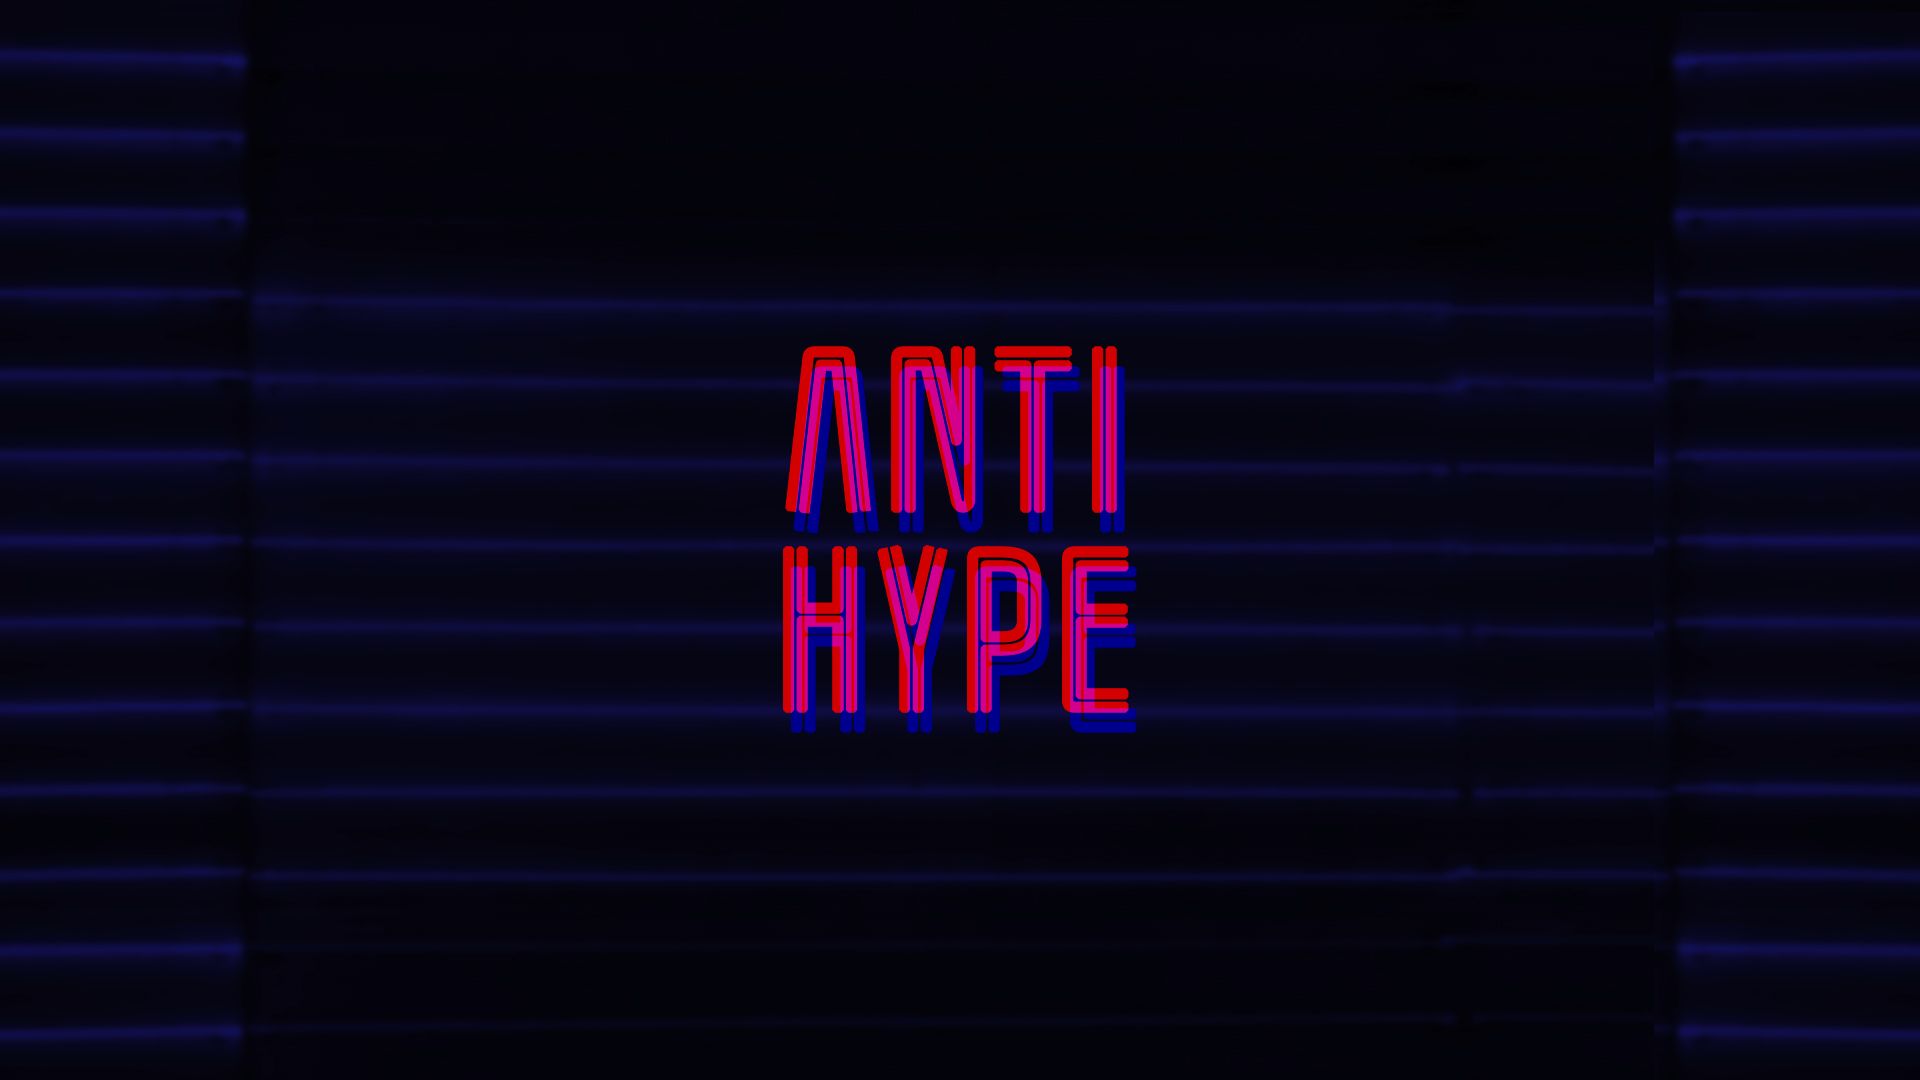 The anti hype logo in a dark room - Glitch